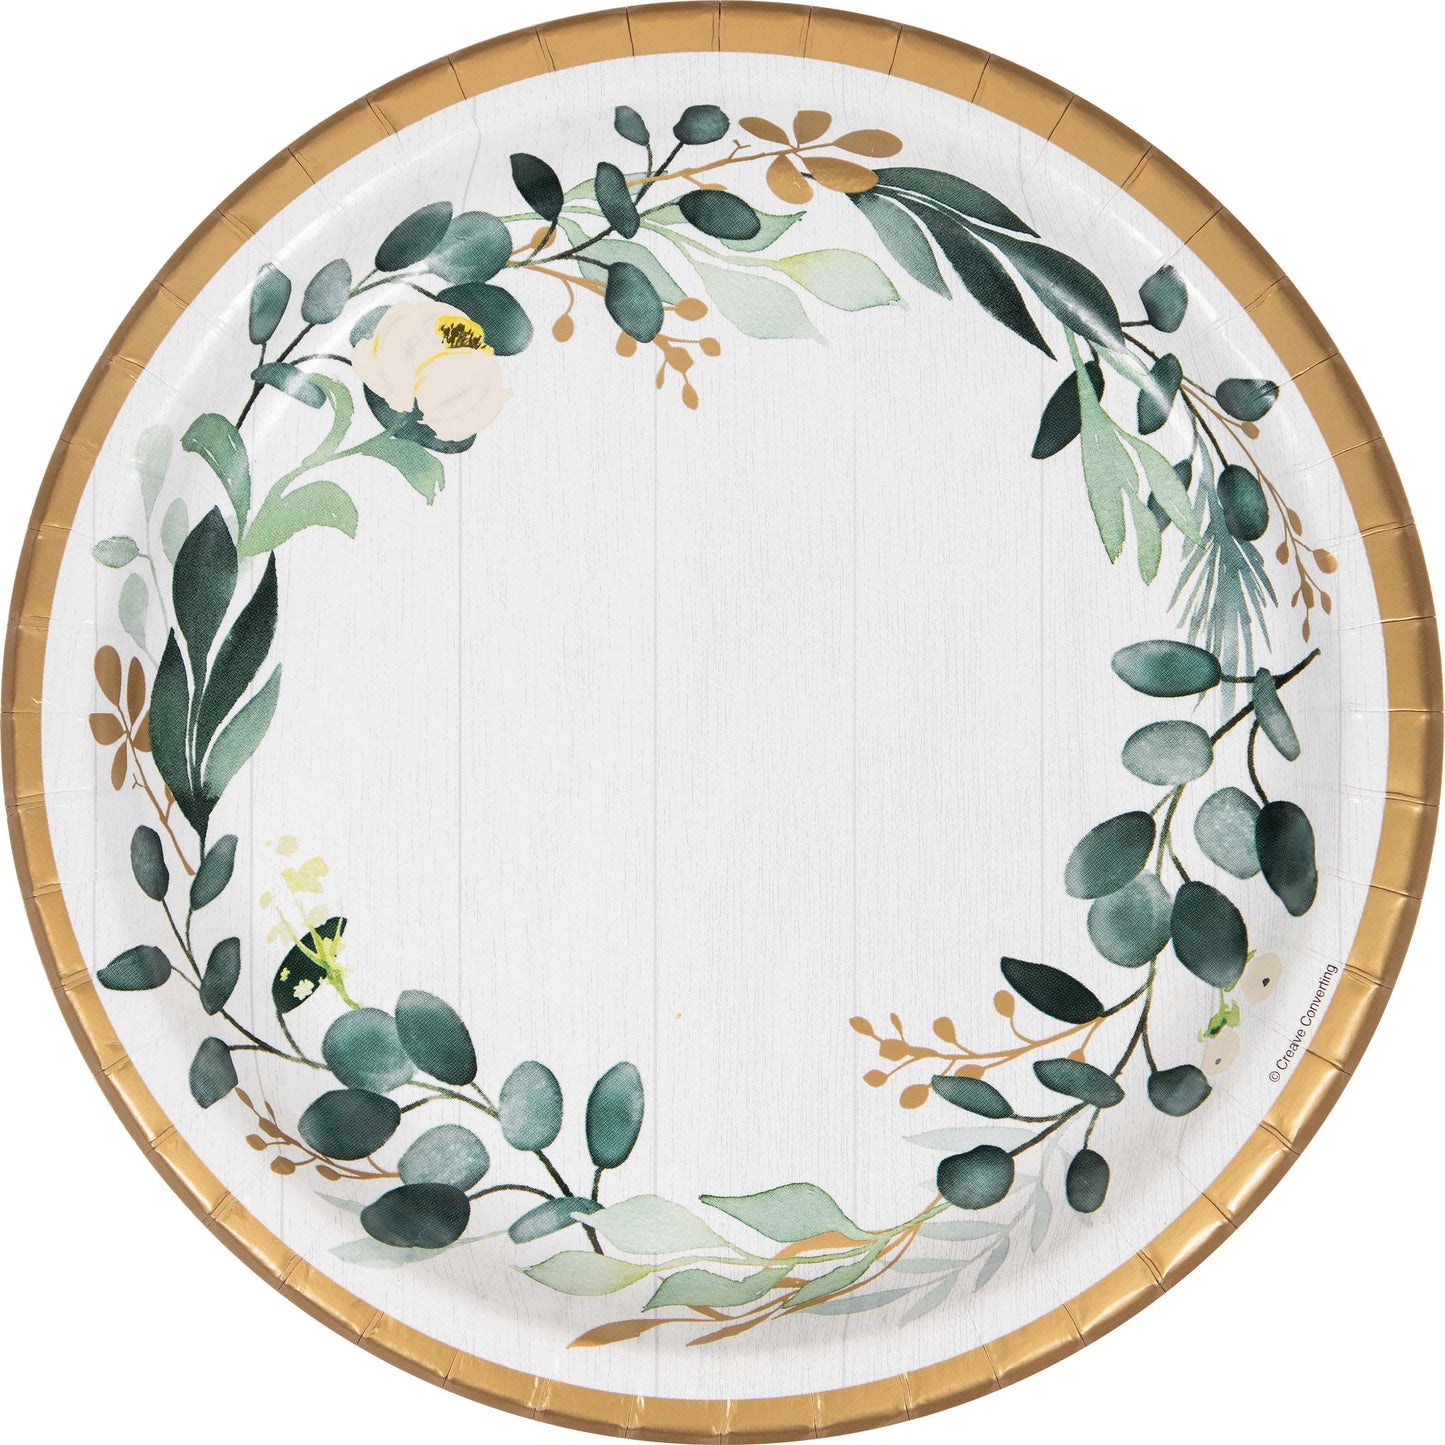 Banquet Plates - Eucalyptus Greens 8ct